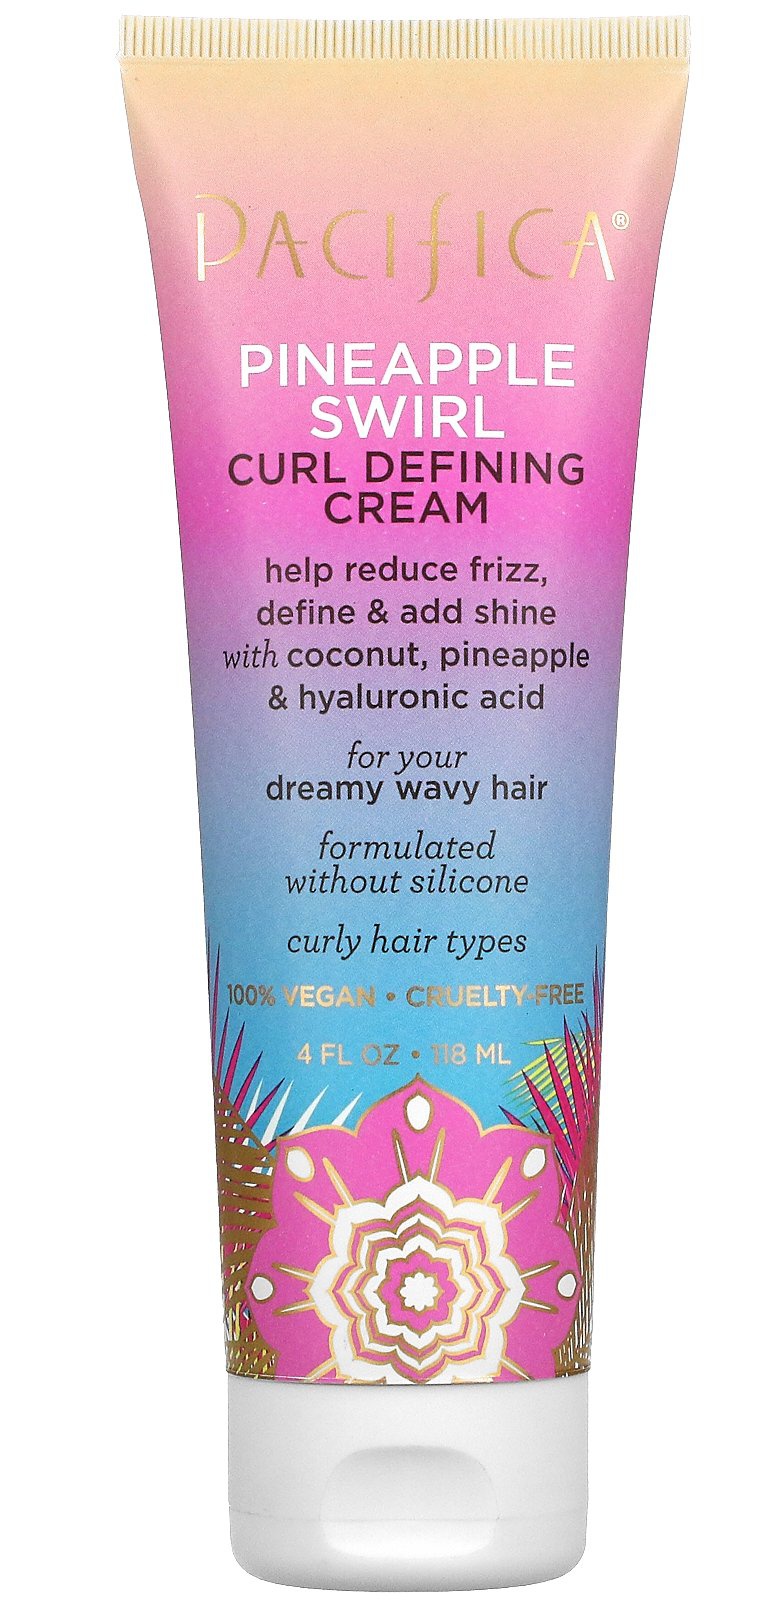 Pacifica Pineapple Swirl Curl Defining Cream